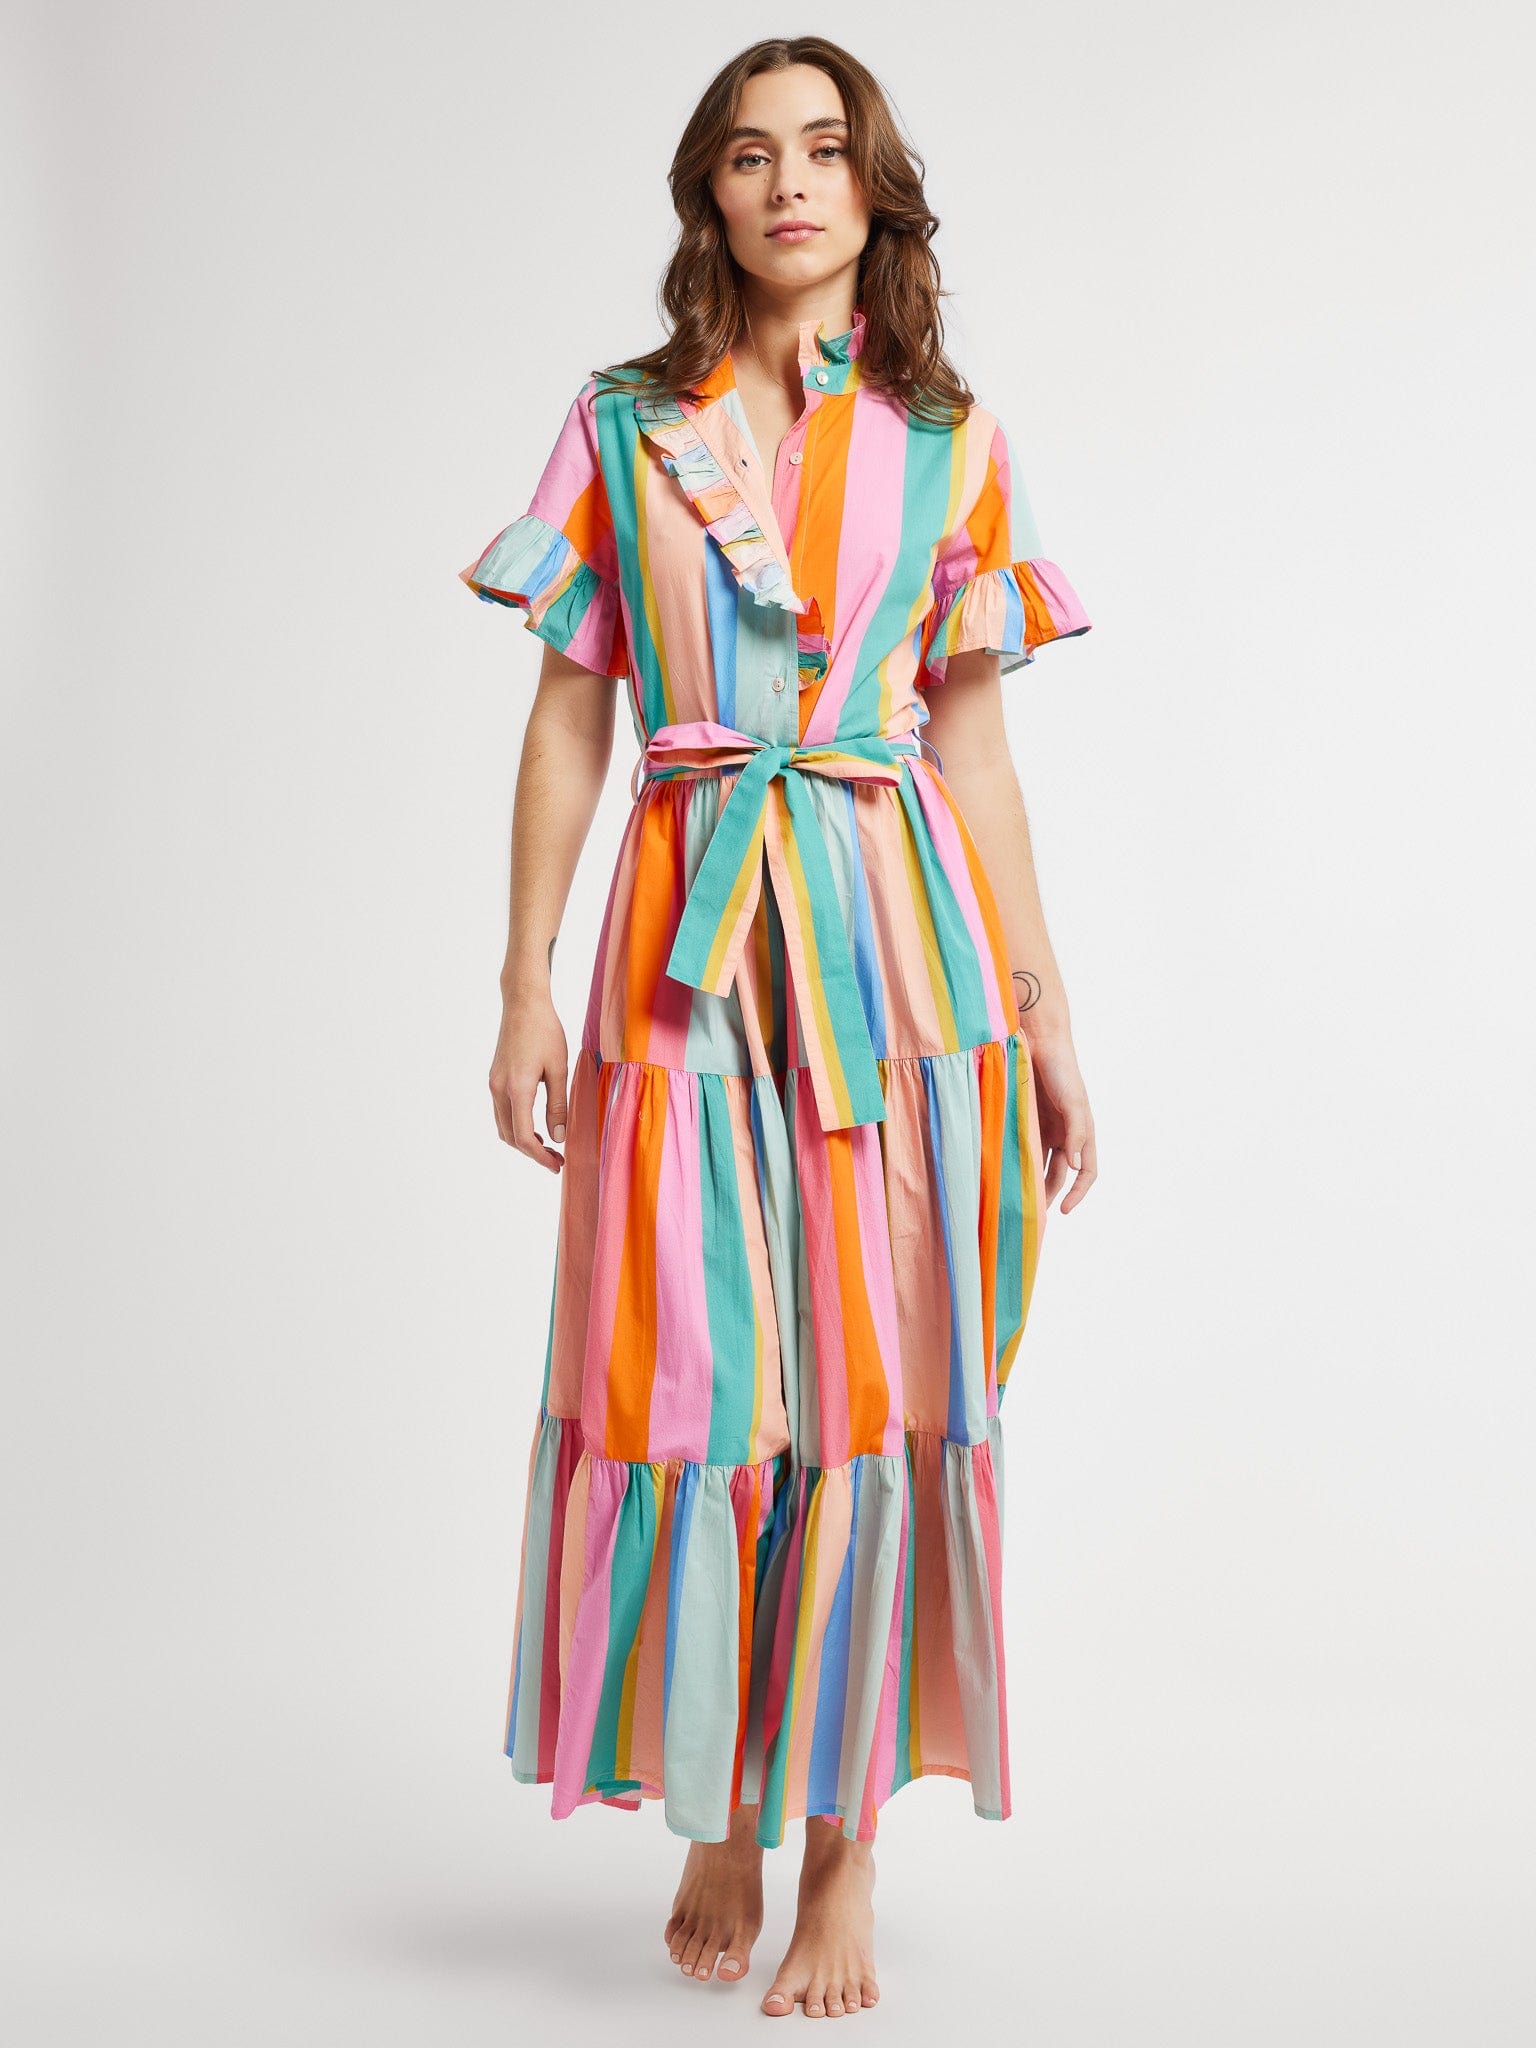 MILLE Clothing Victoria Dress in Confetti Stripe